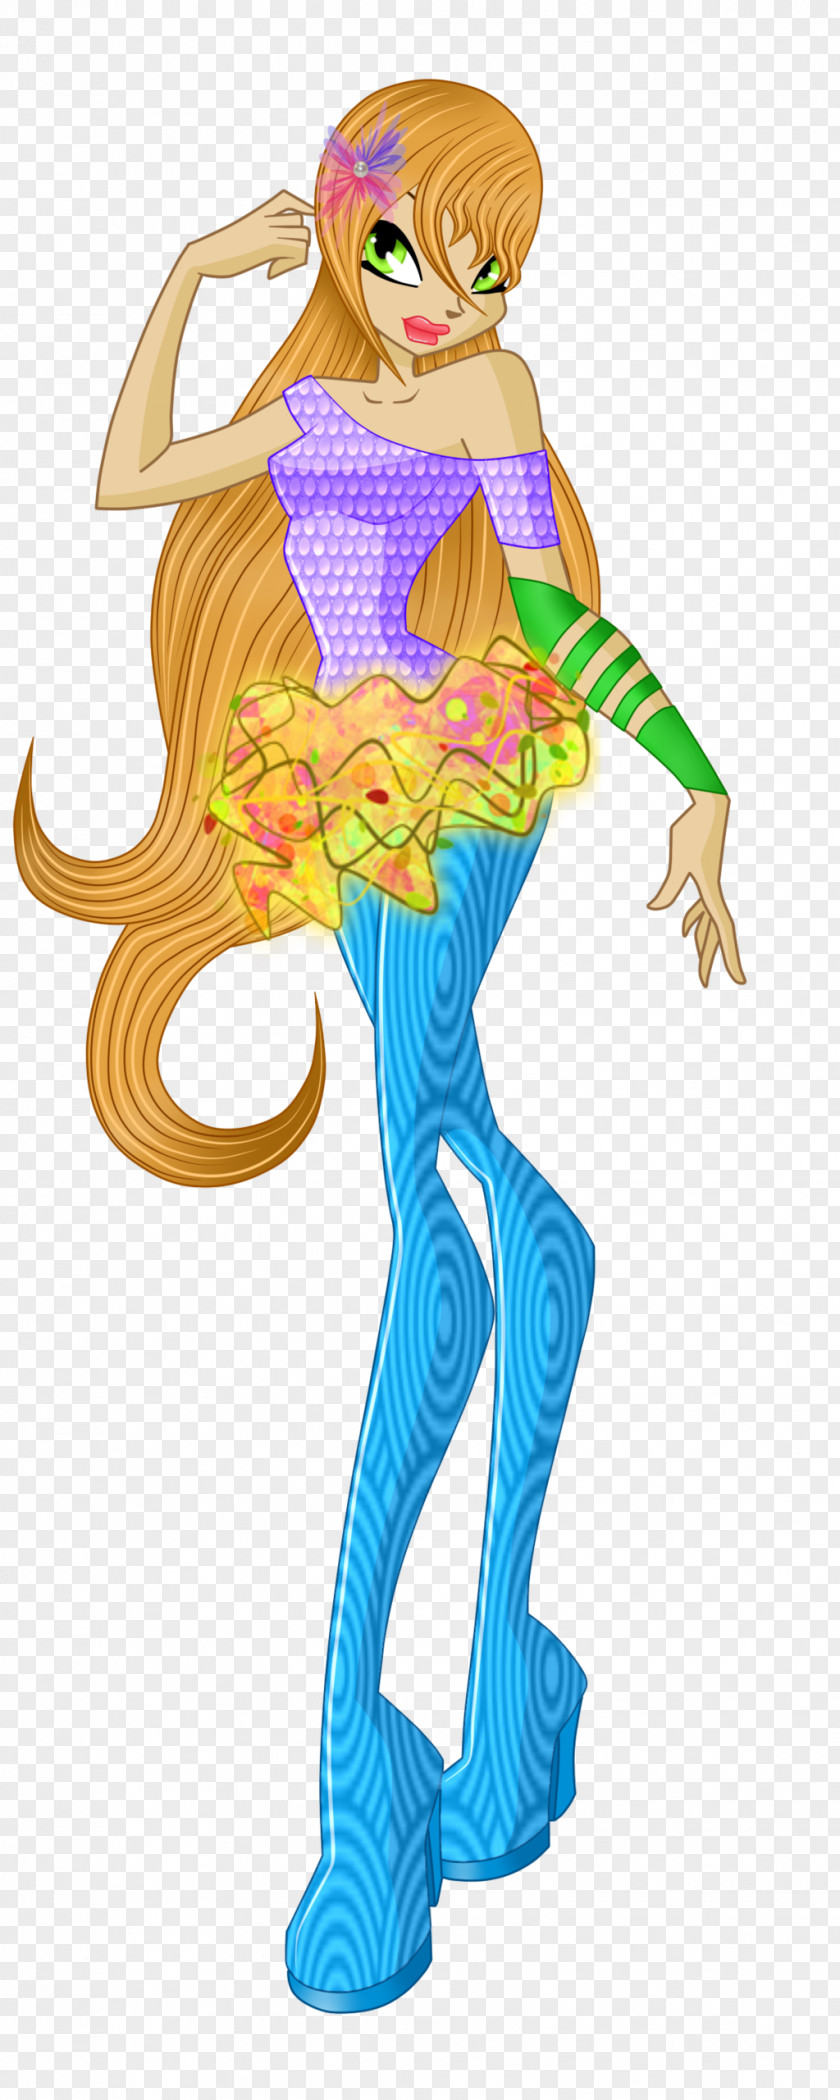 Sirenix Mermaid Costume Clip Art PNG